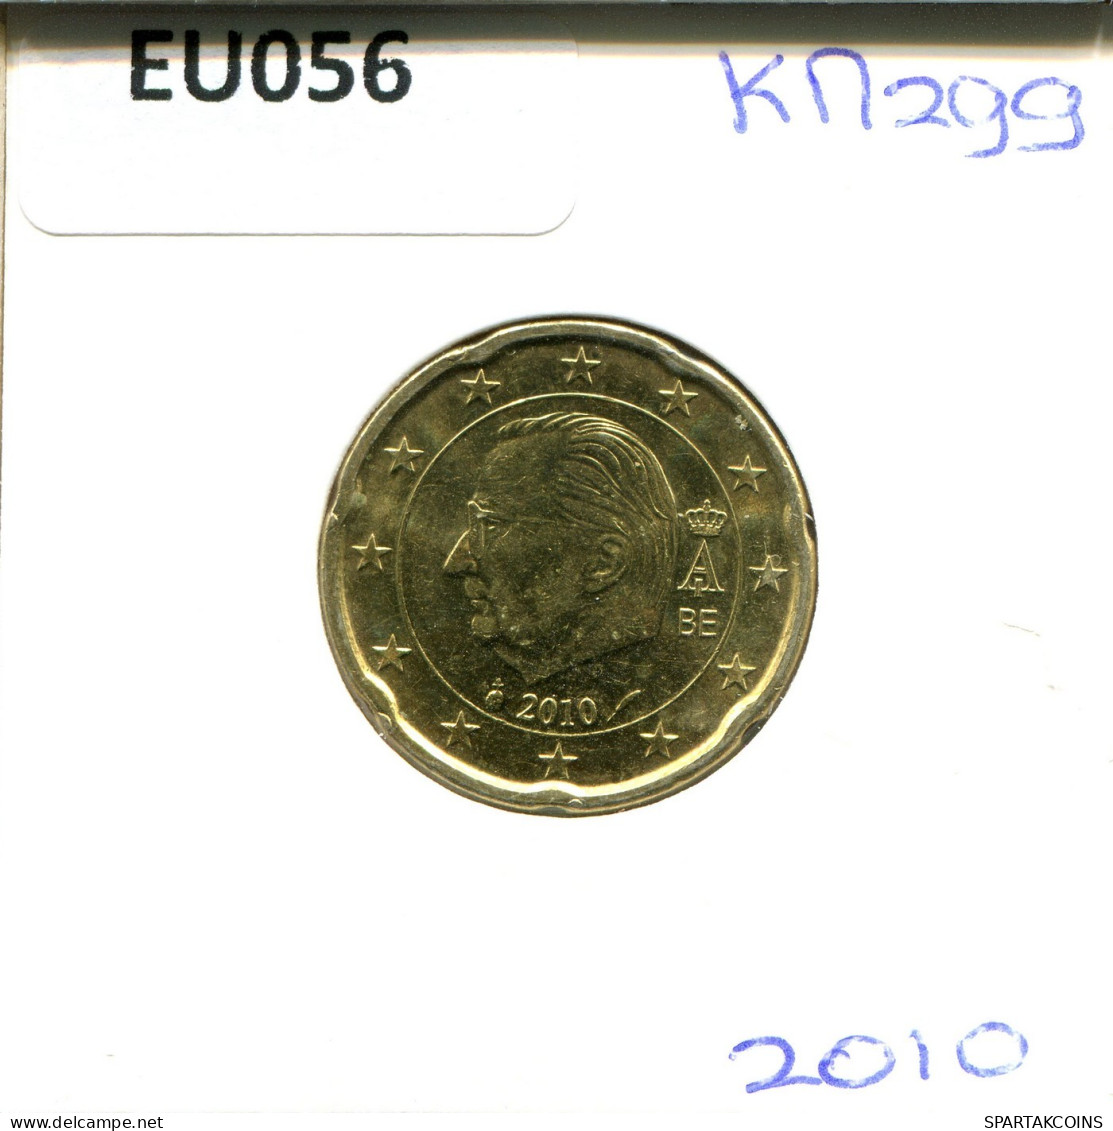 20 EURO CENTS 2010 BELGIEN BELGIUM Münze #EU056.D.A - Belgium